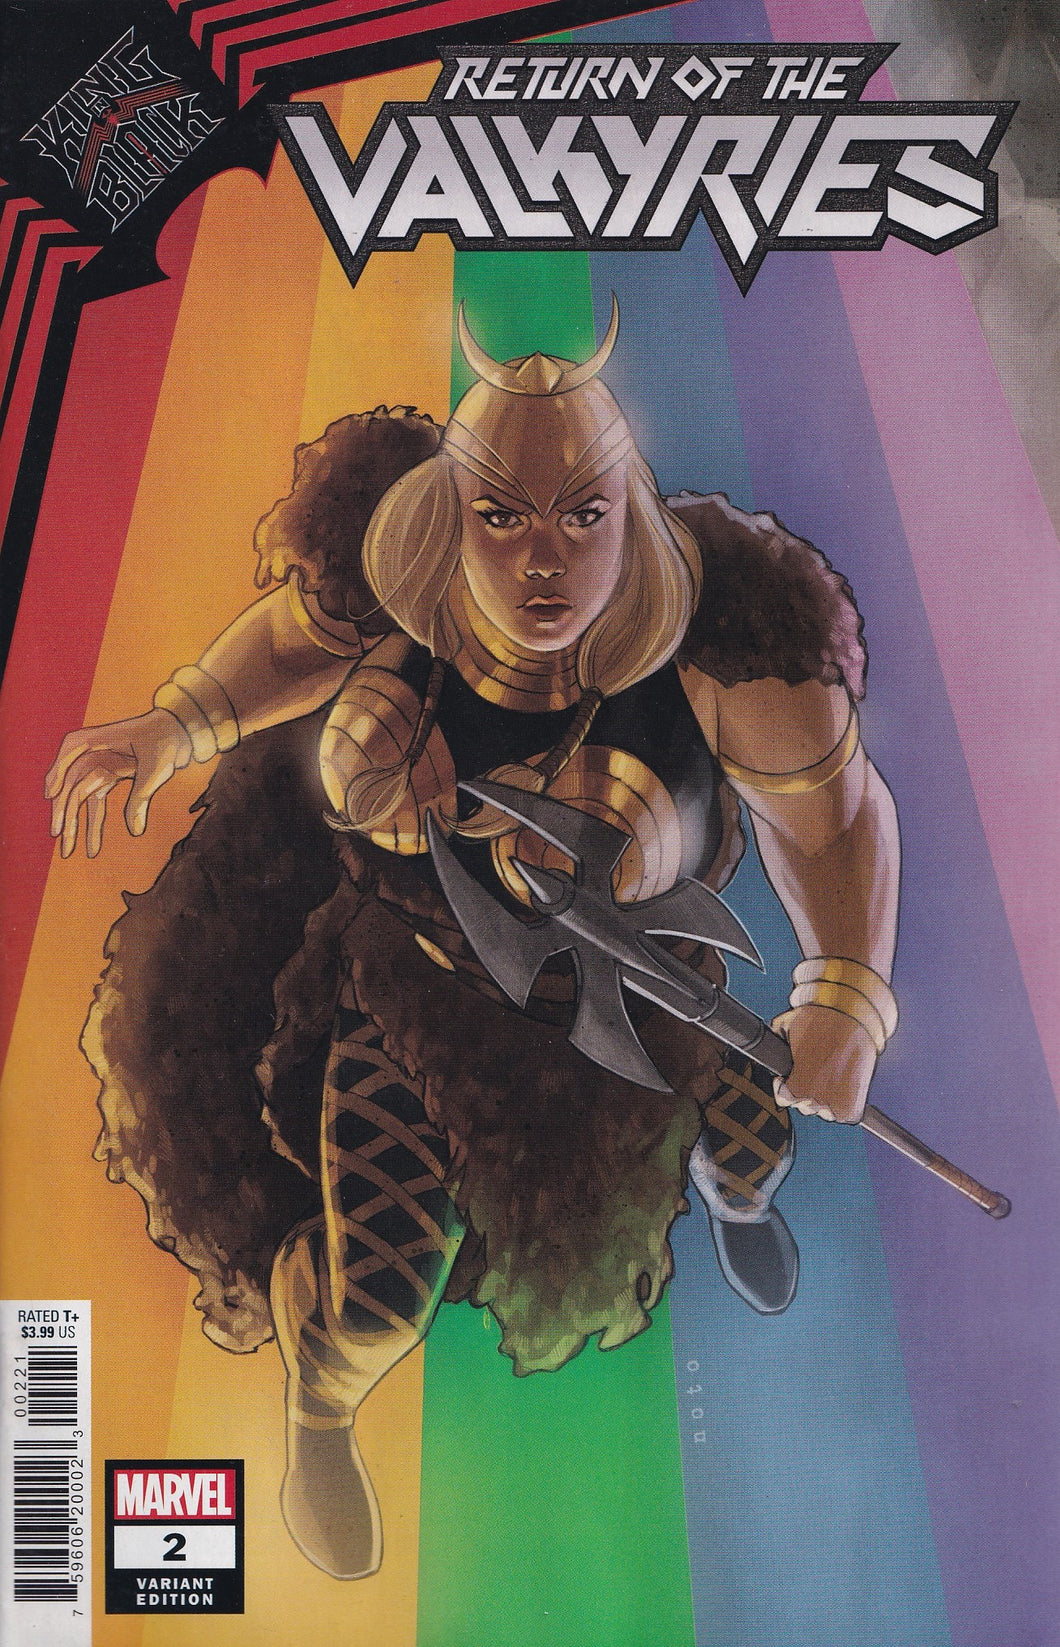 KING IN BLACK: RETURN OF THE VALKYRIES #2 (PHIL NOTO VARIANT) ~ Marvel Comics